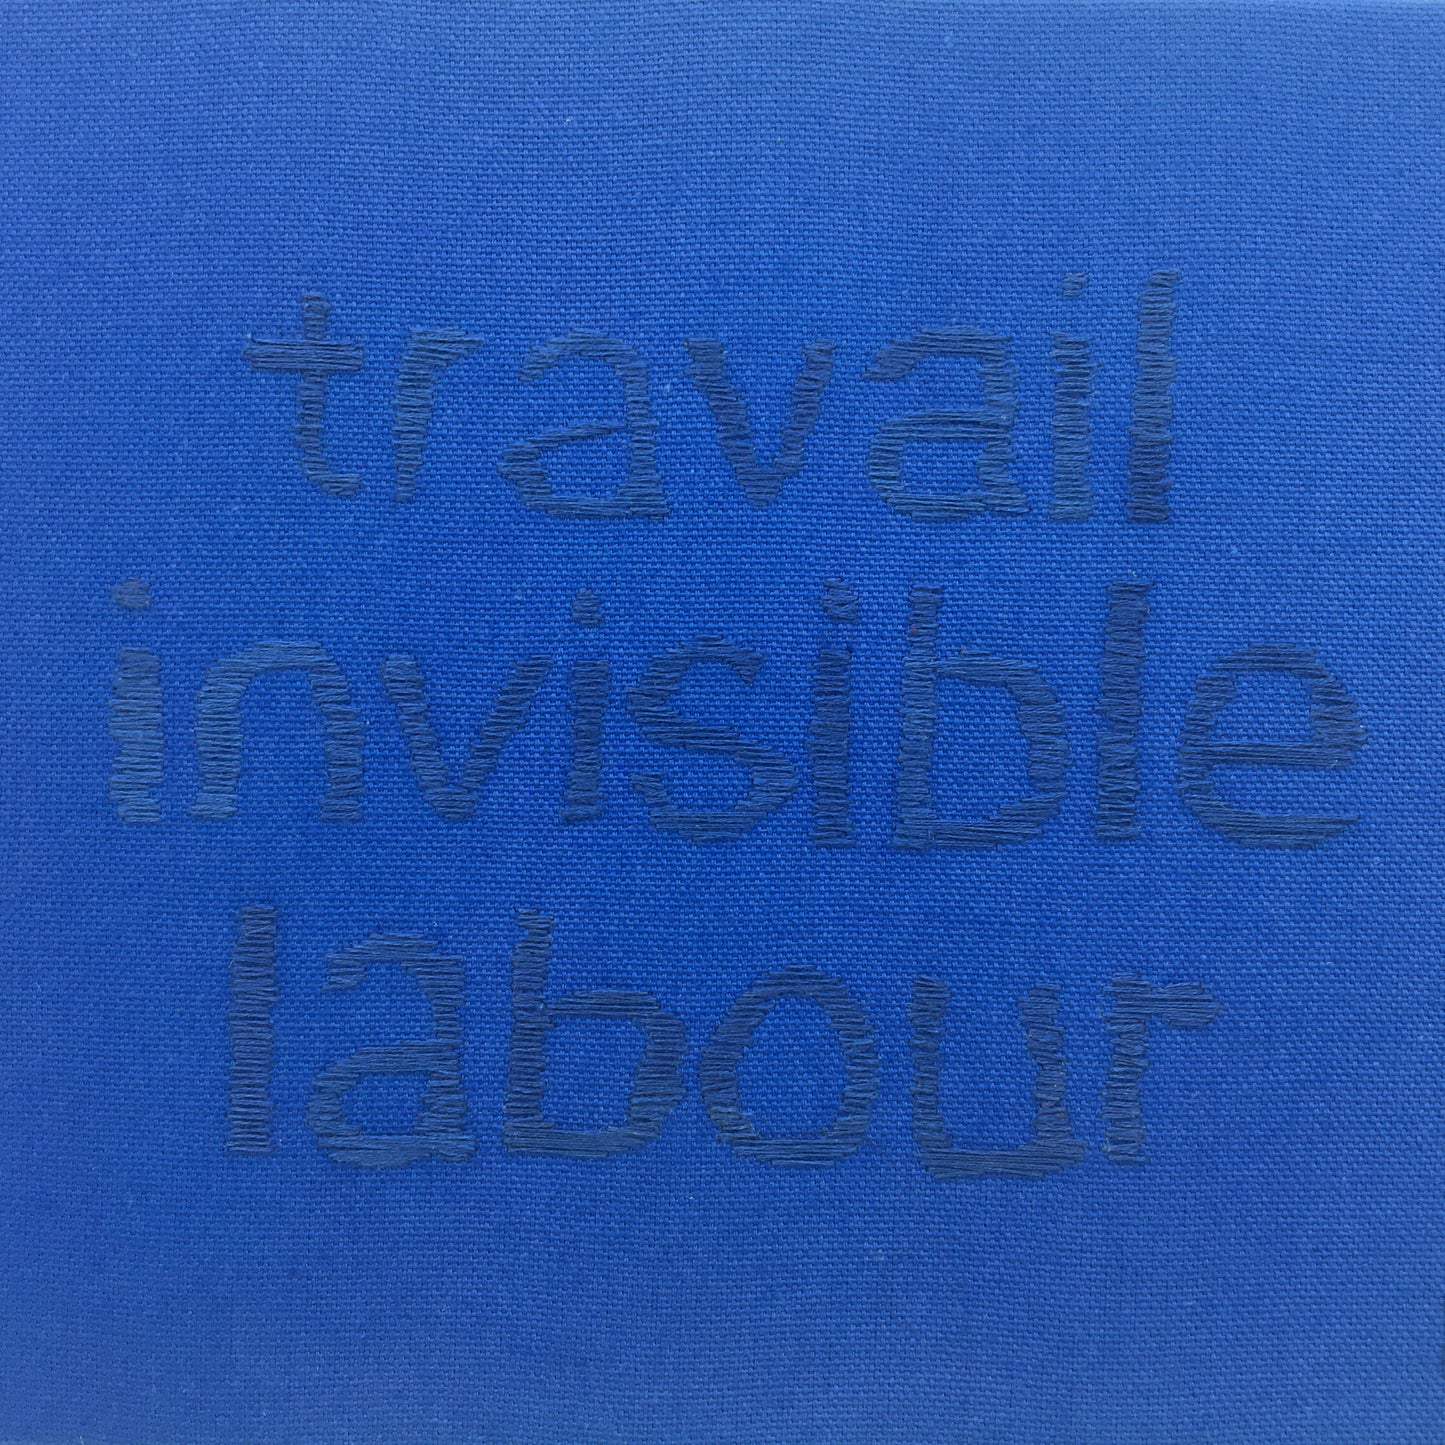 travail / invisible / labour